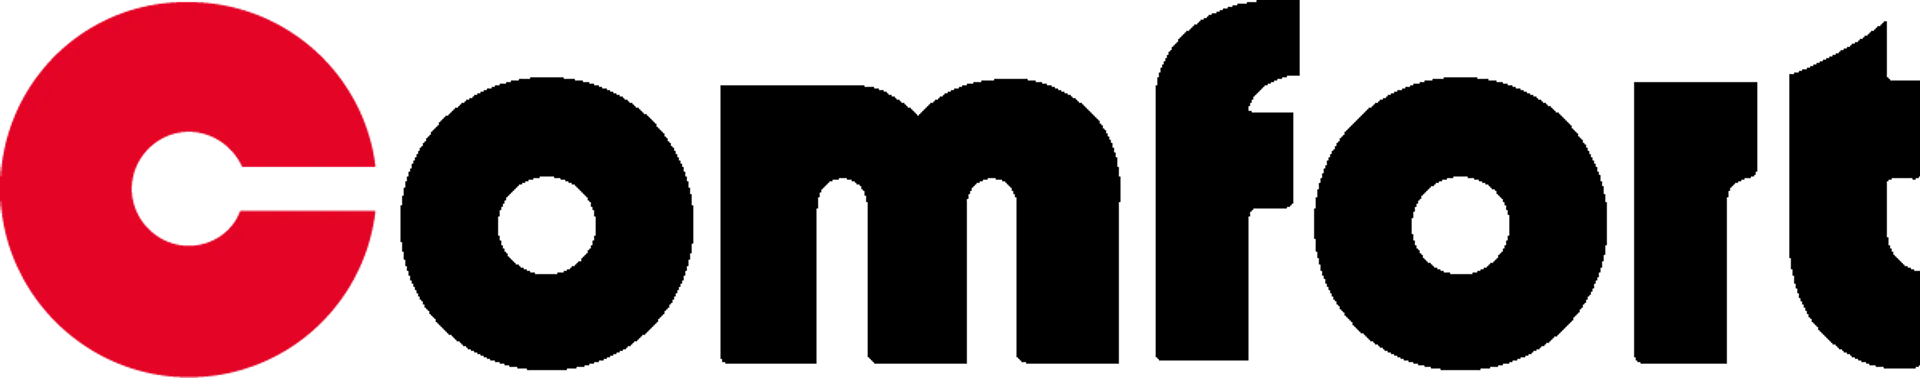 COMFORT logo